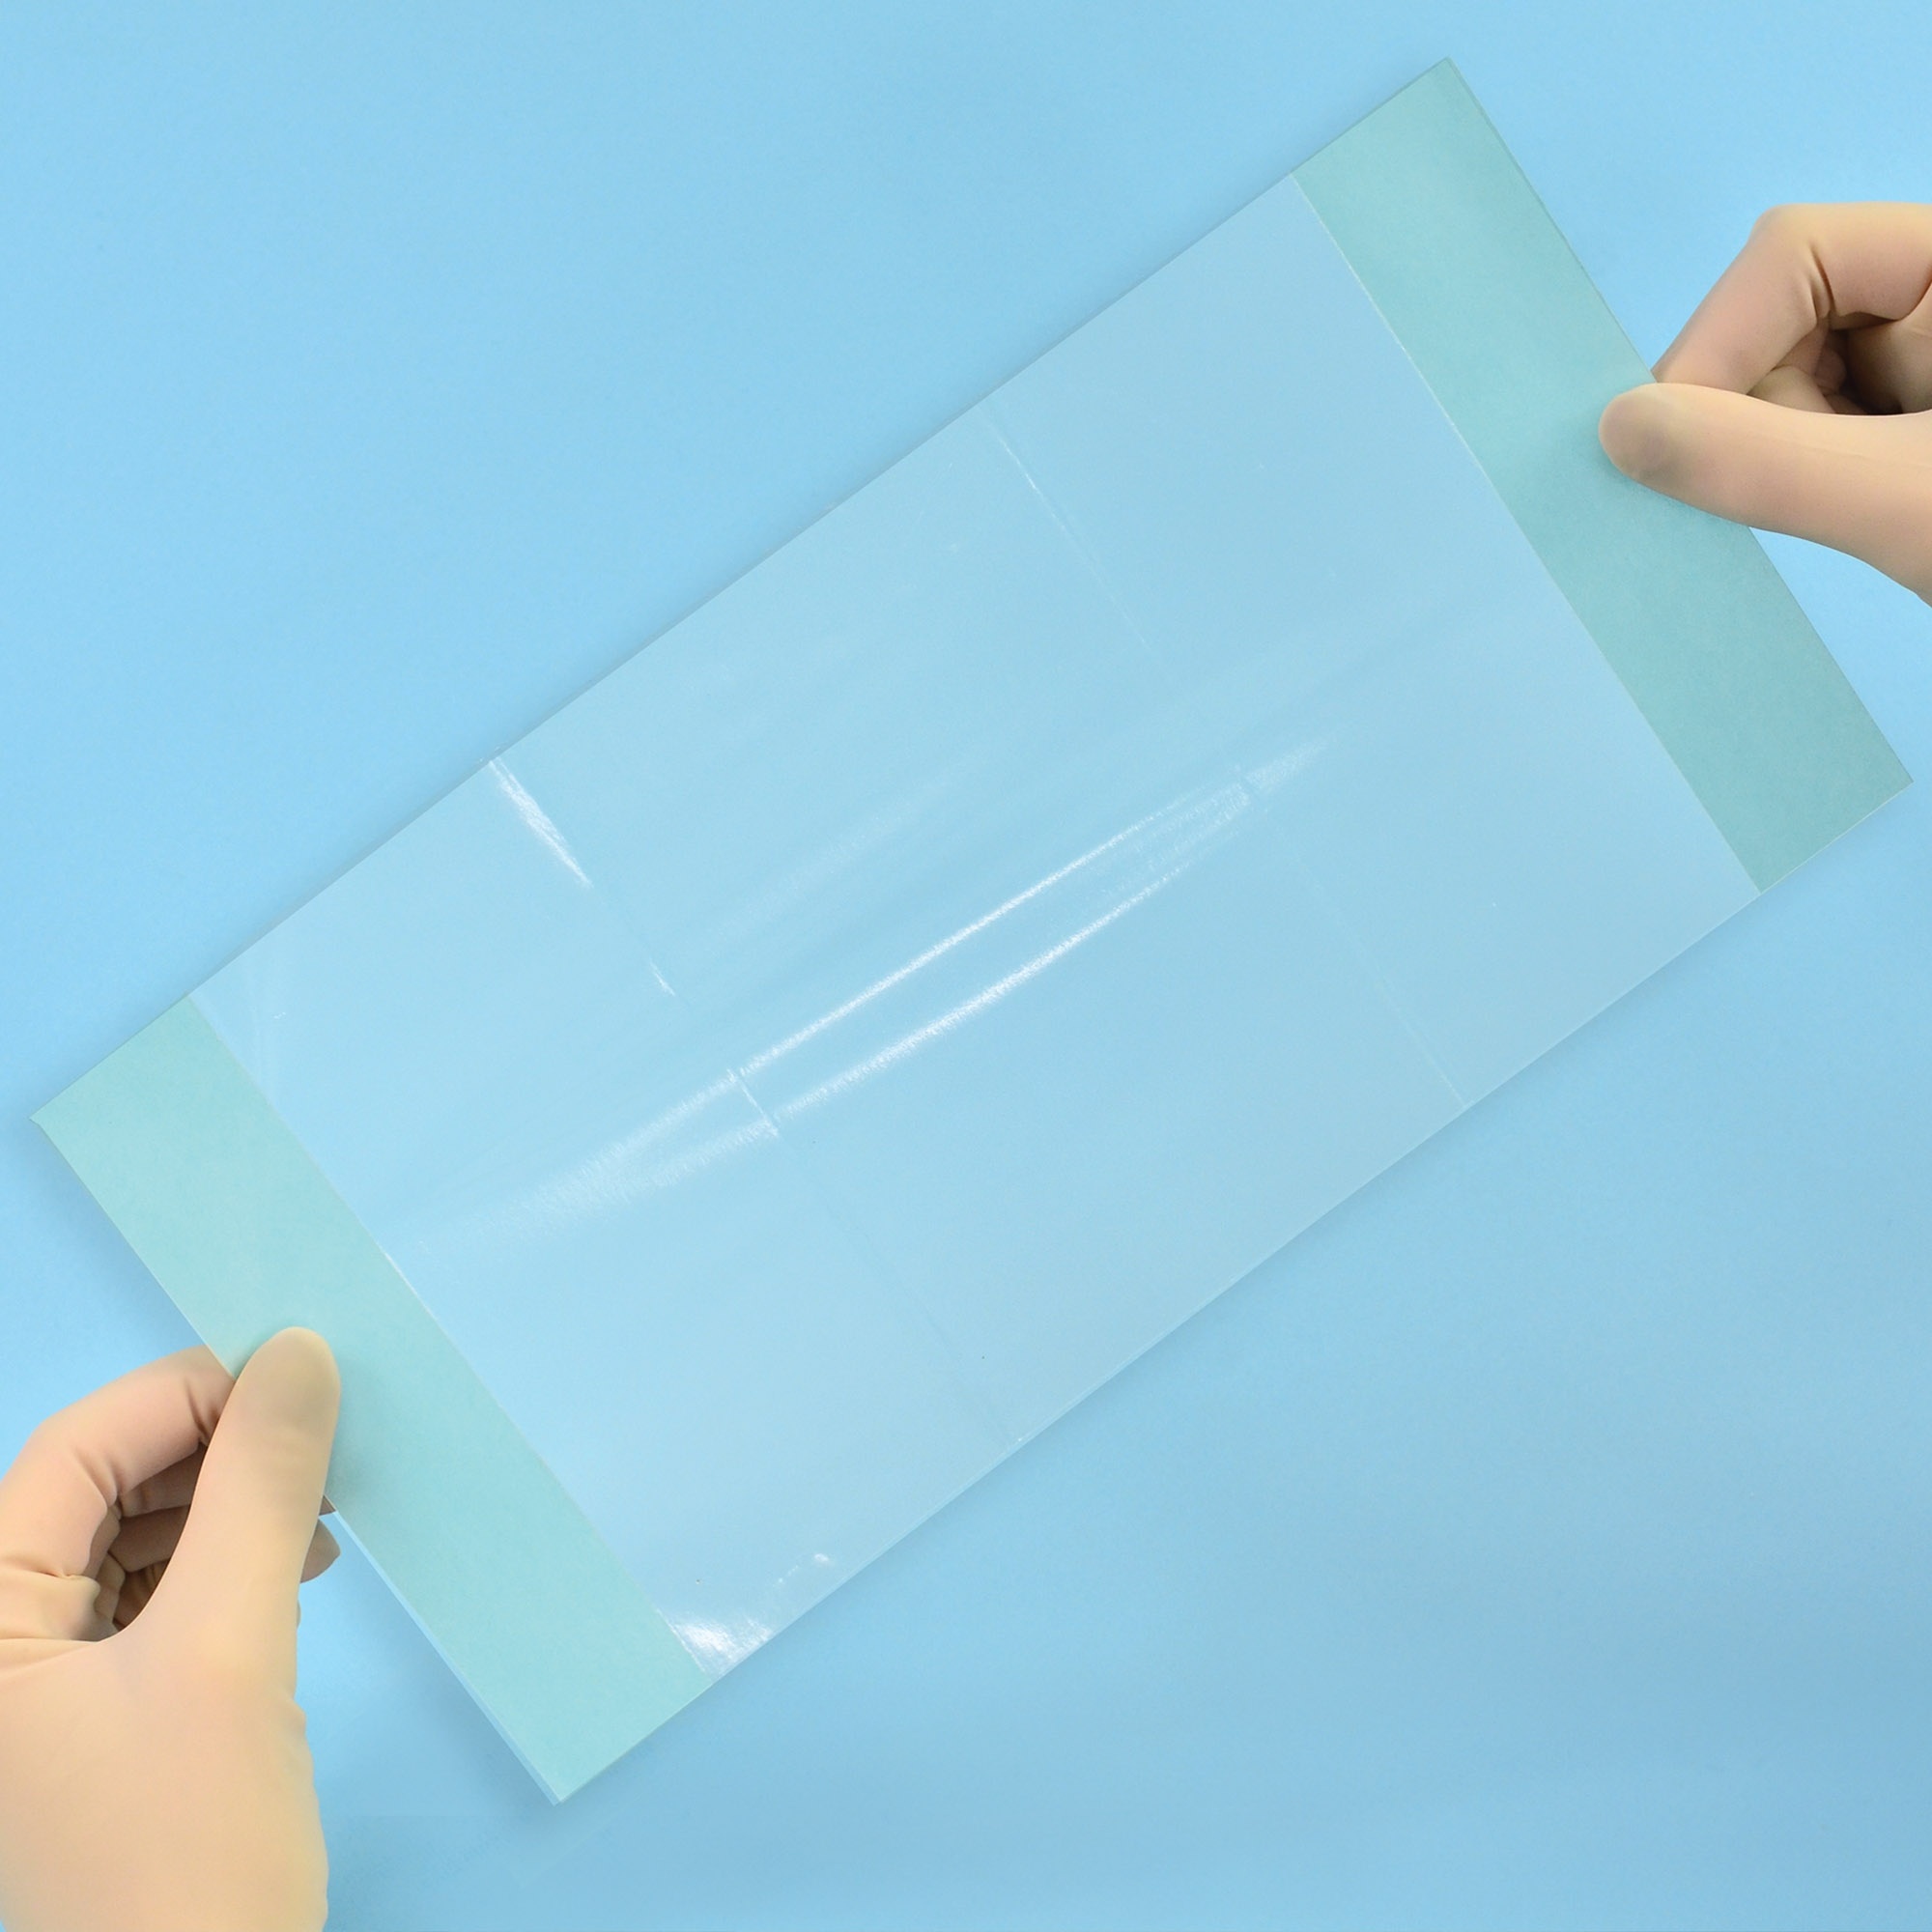 elastoFILM - incise film, self adhesive, sterile